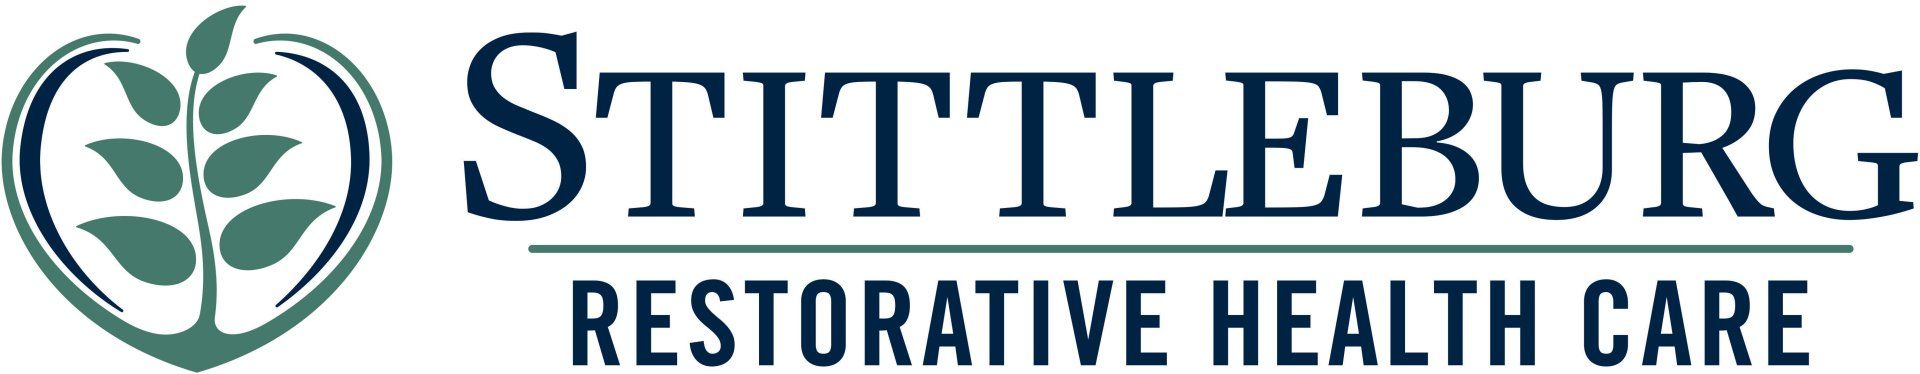 Stittleburg Restorative Health Care - Logo